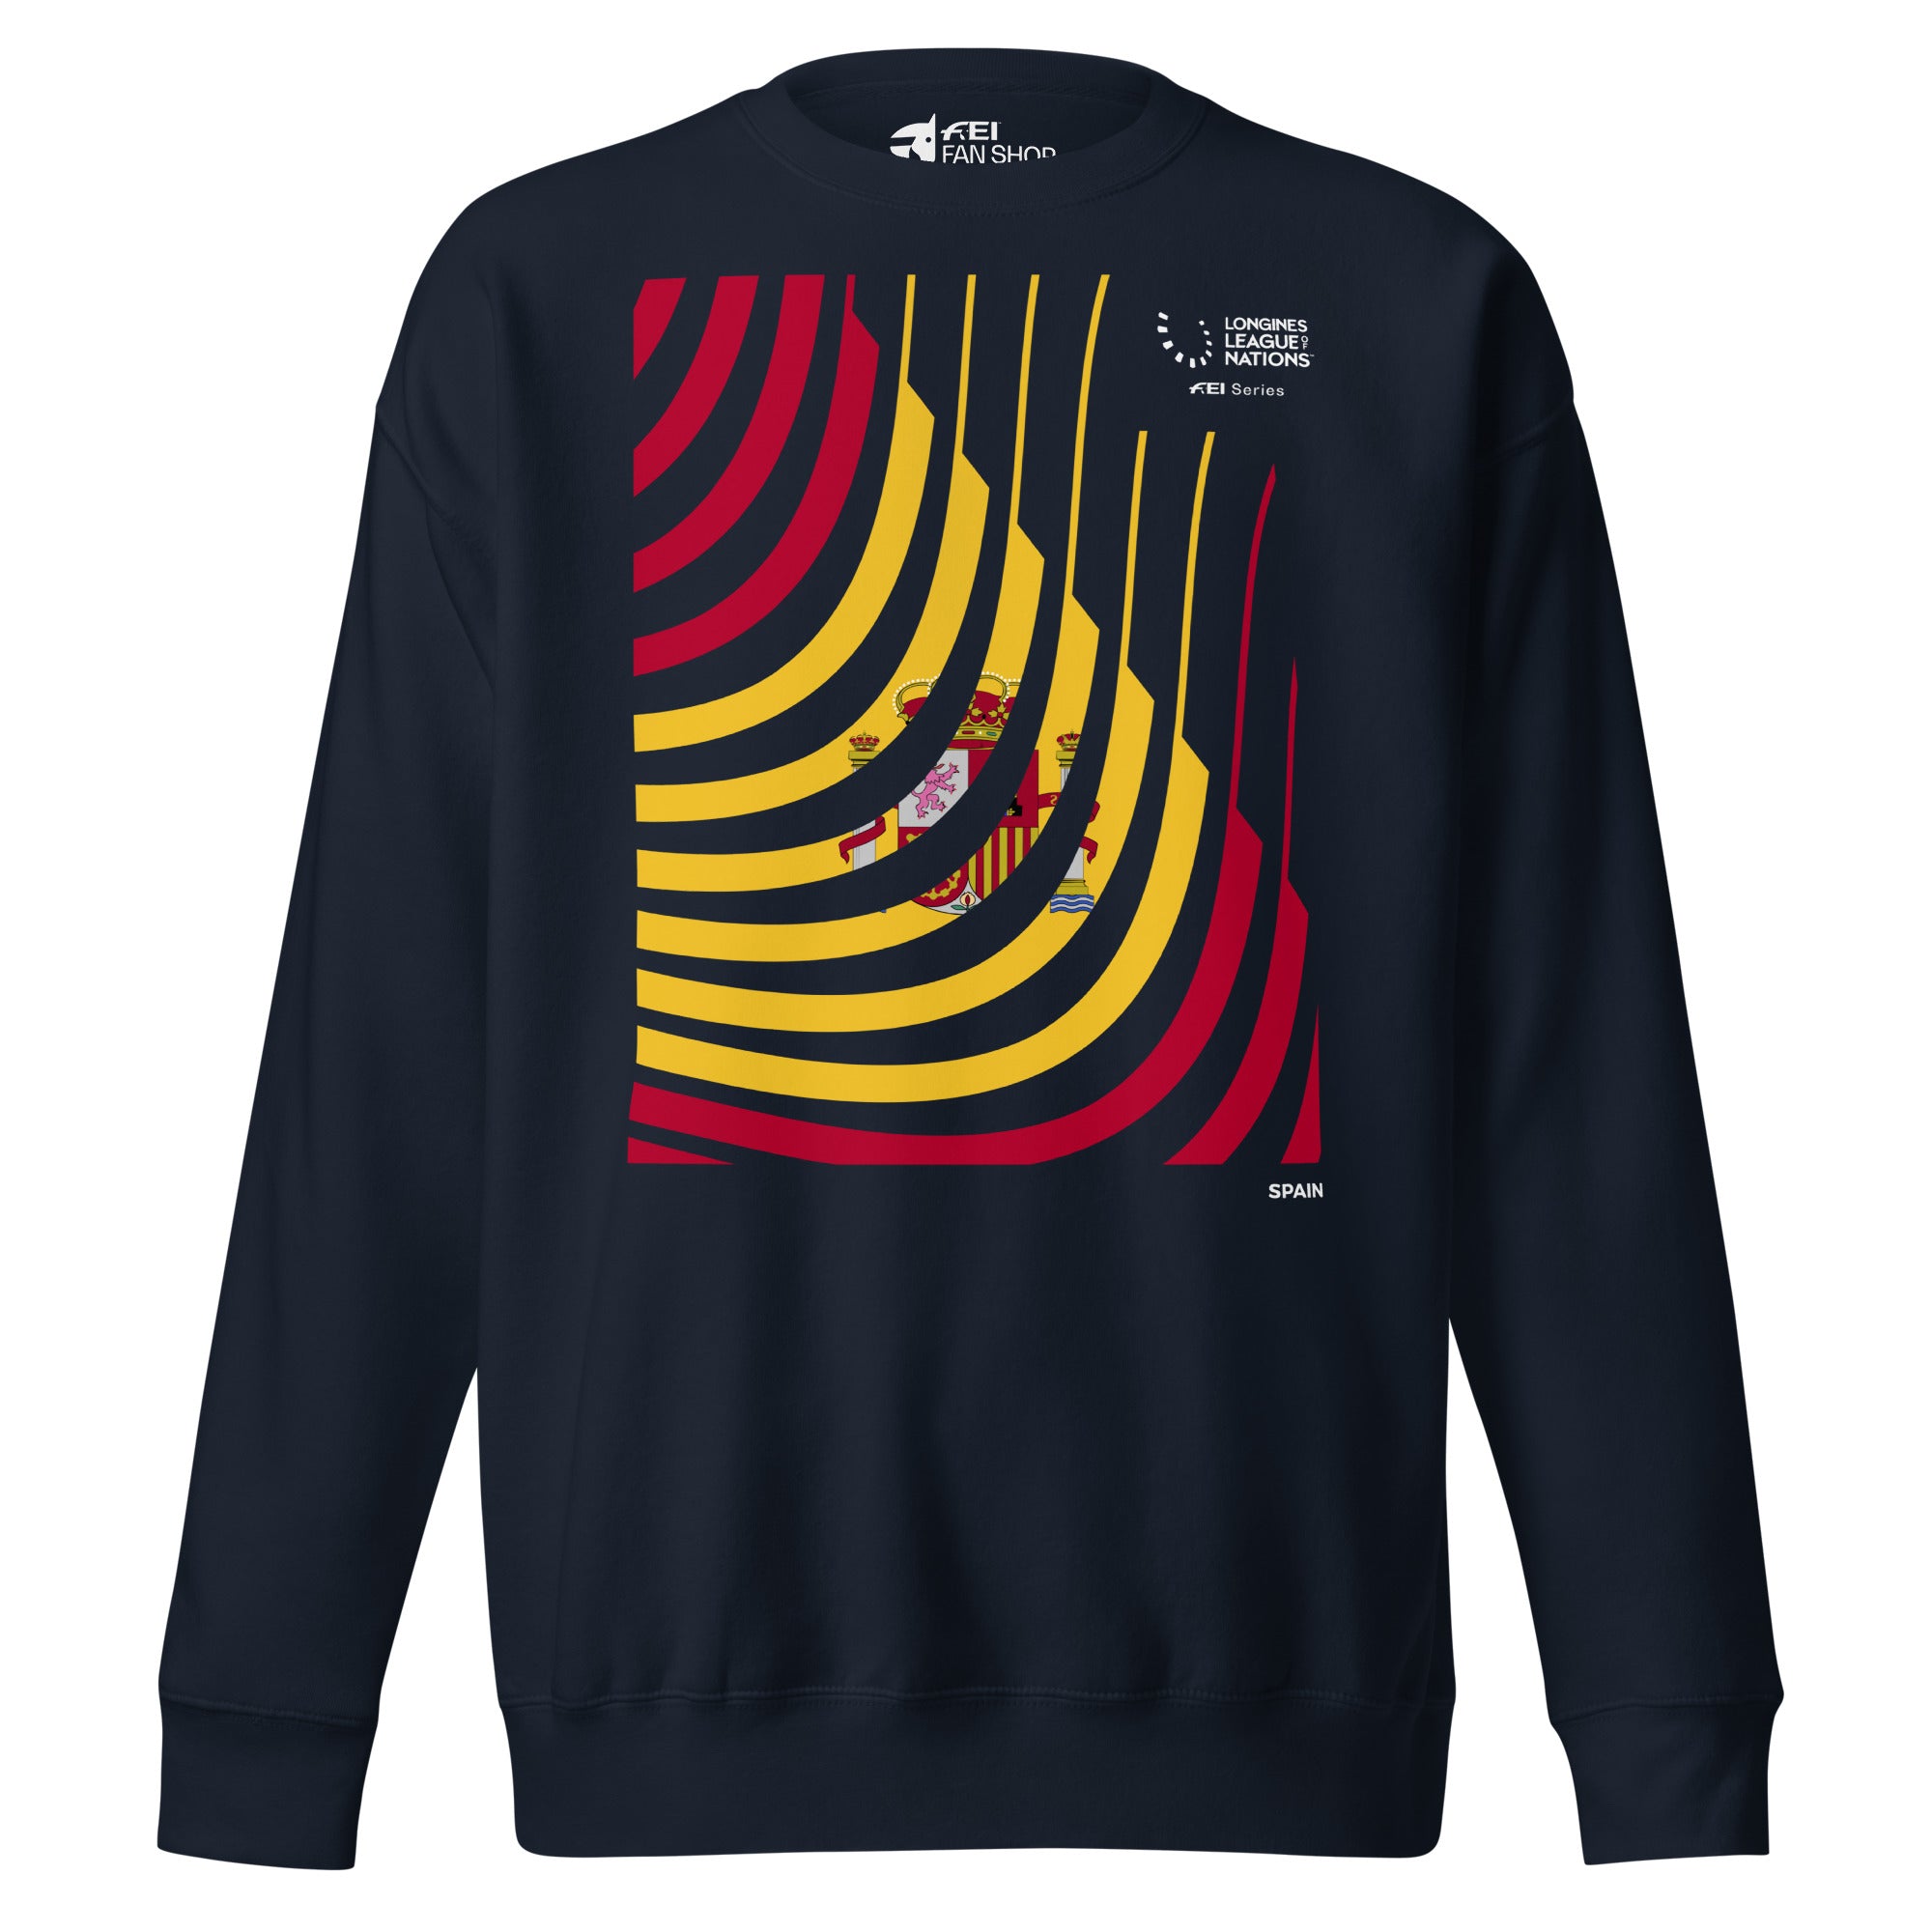 LLN Spain Sweatshirt